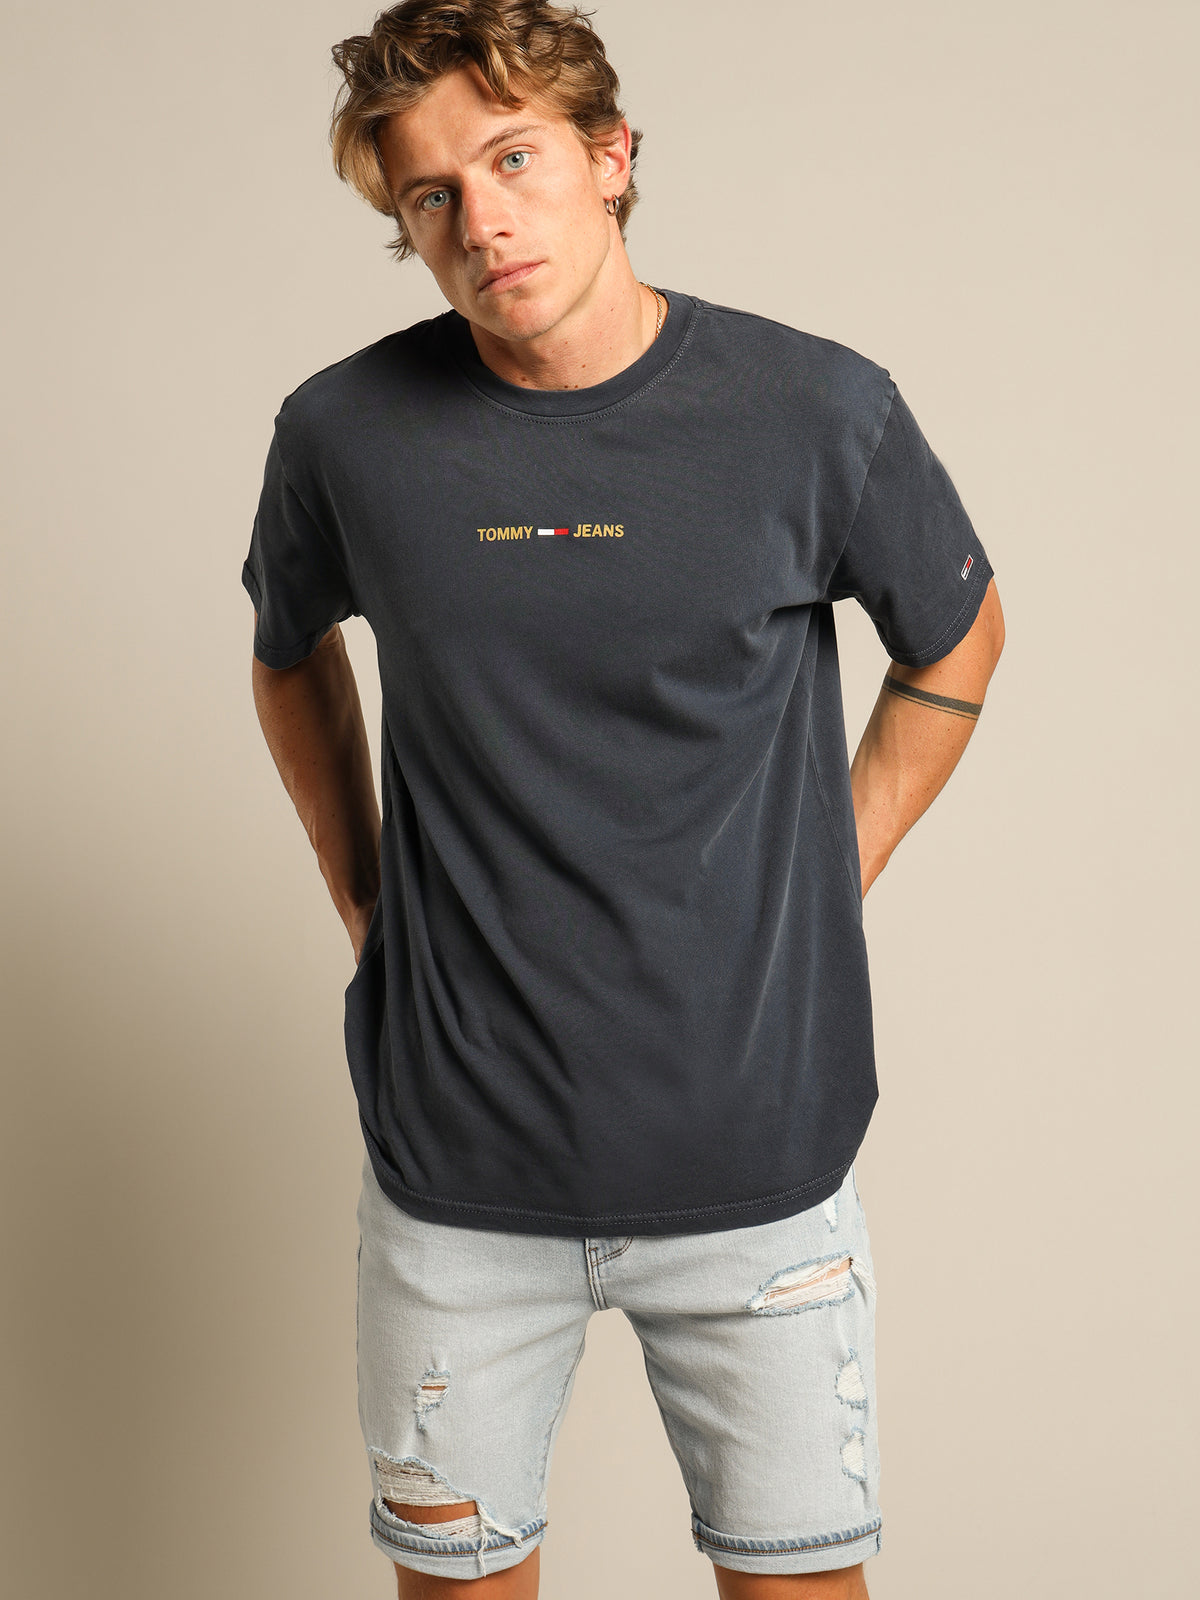 Linear Logo T-Shirt in Navy Blue